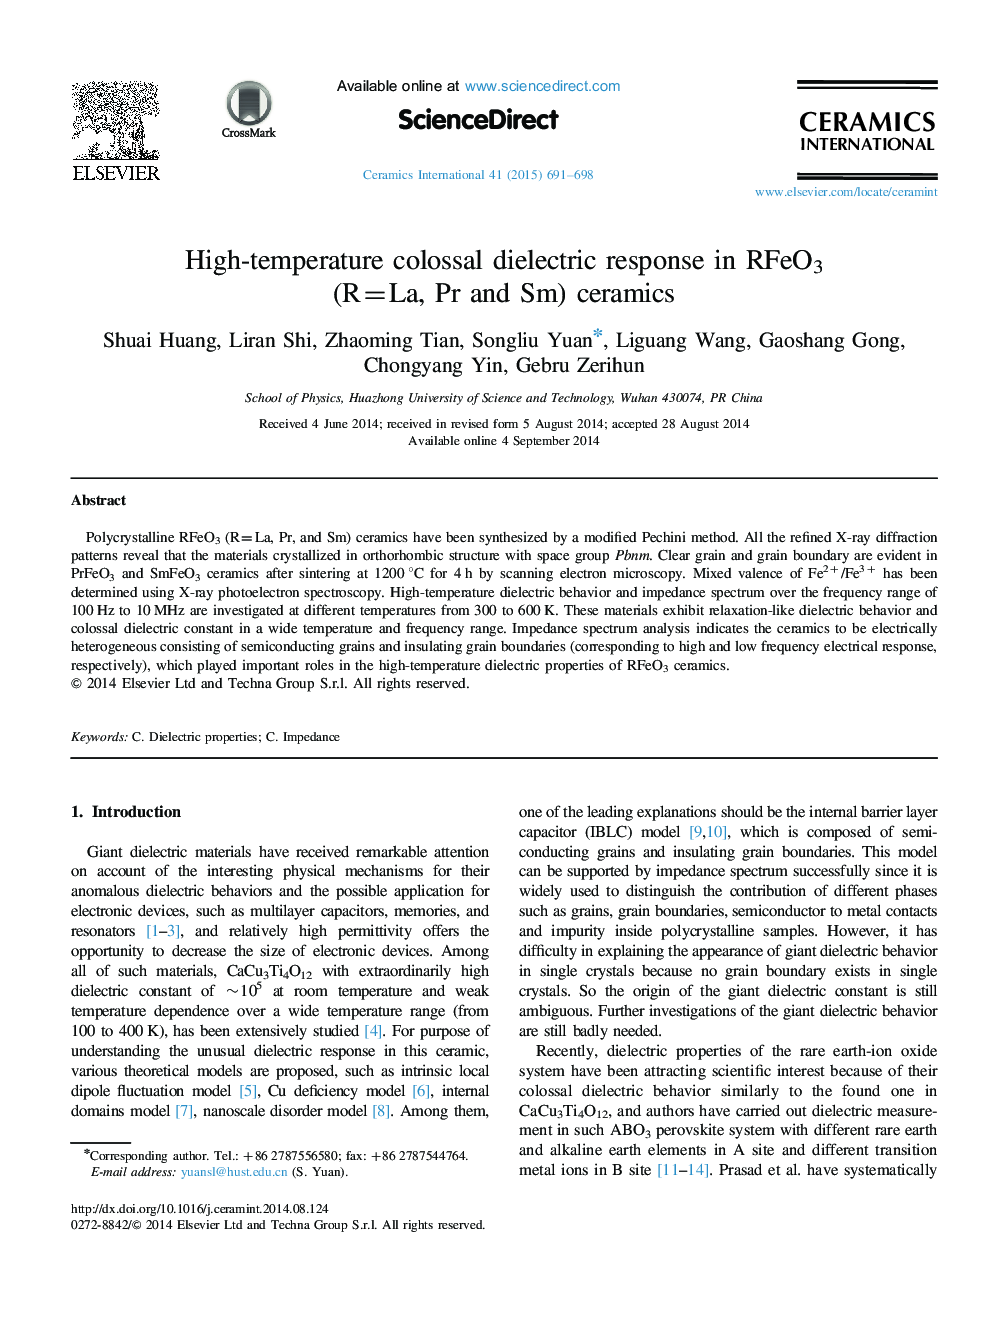 High-temperature colossal dielectric response in RFeO3 (R=La, Pr and Sm) ceramics